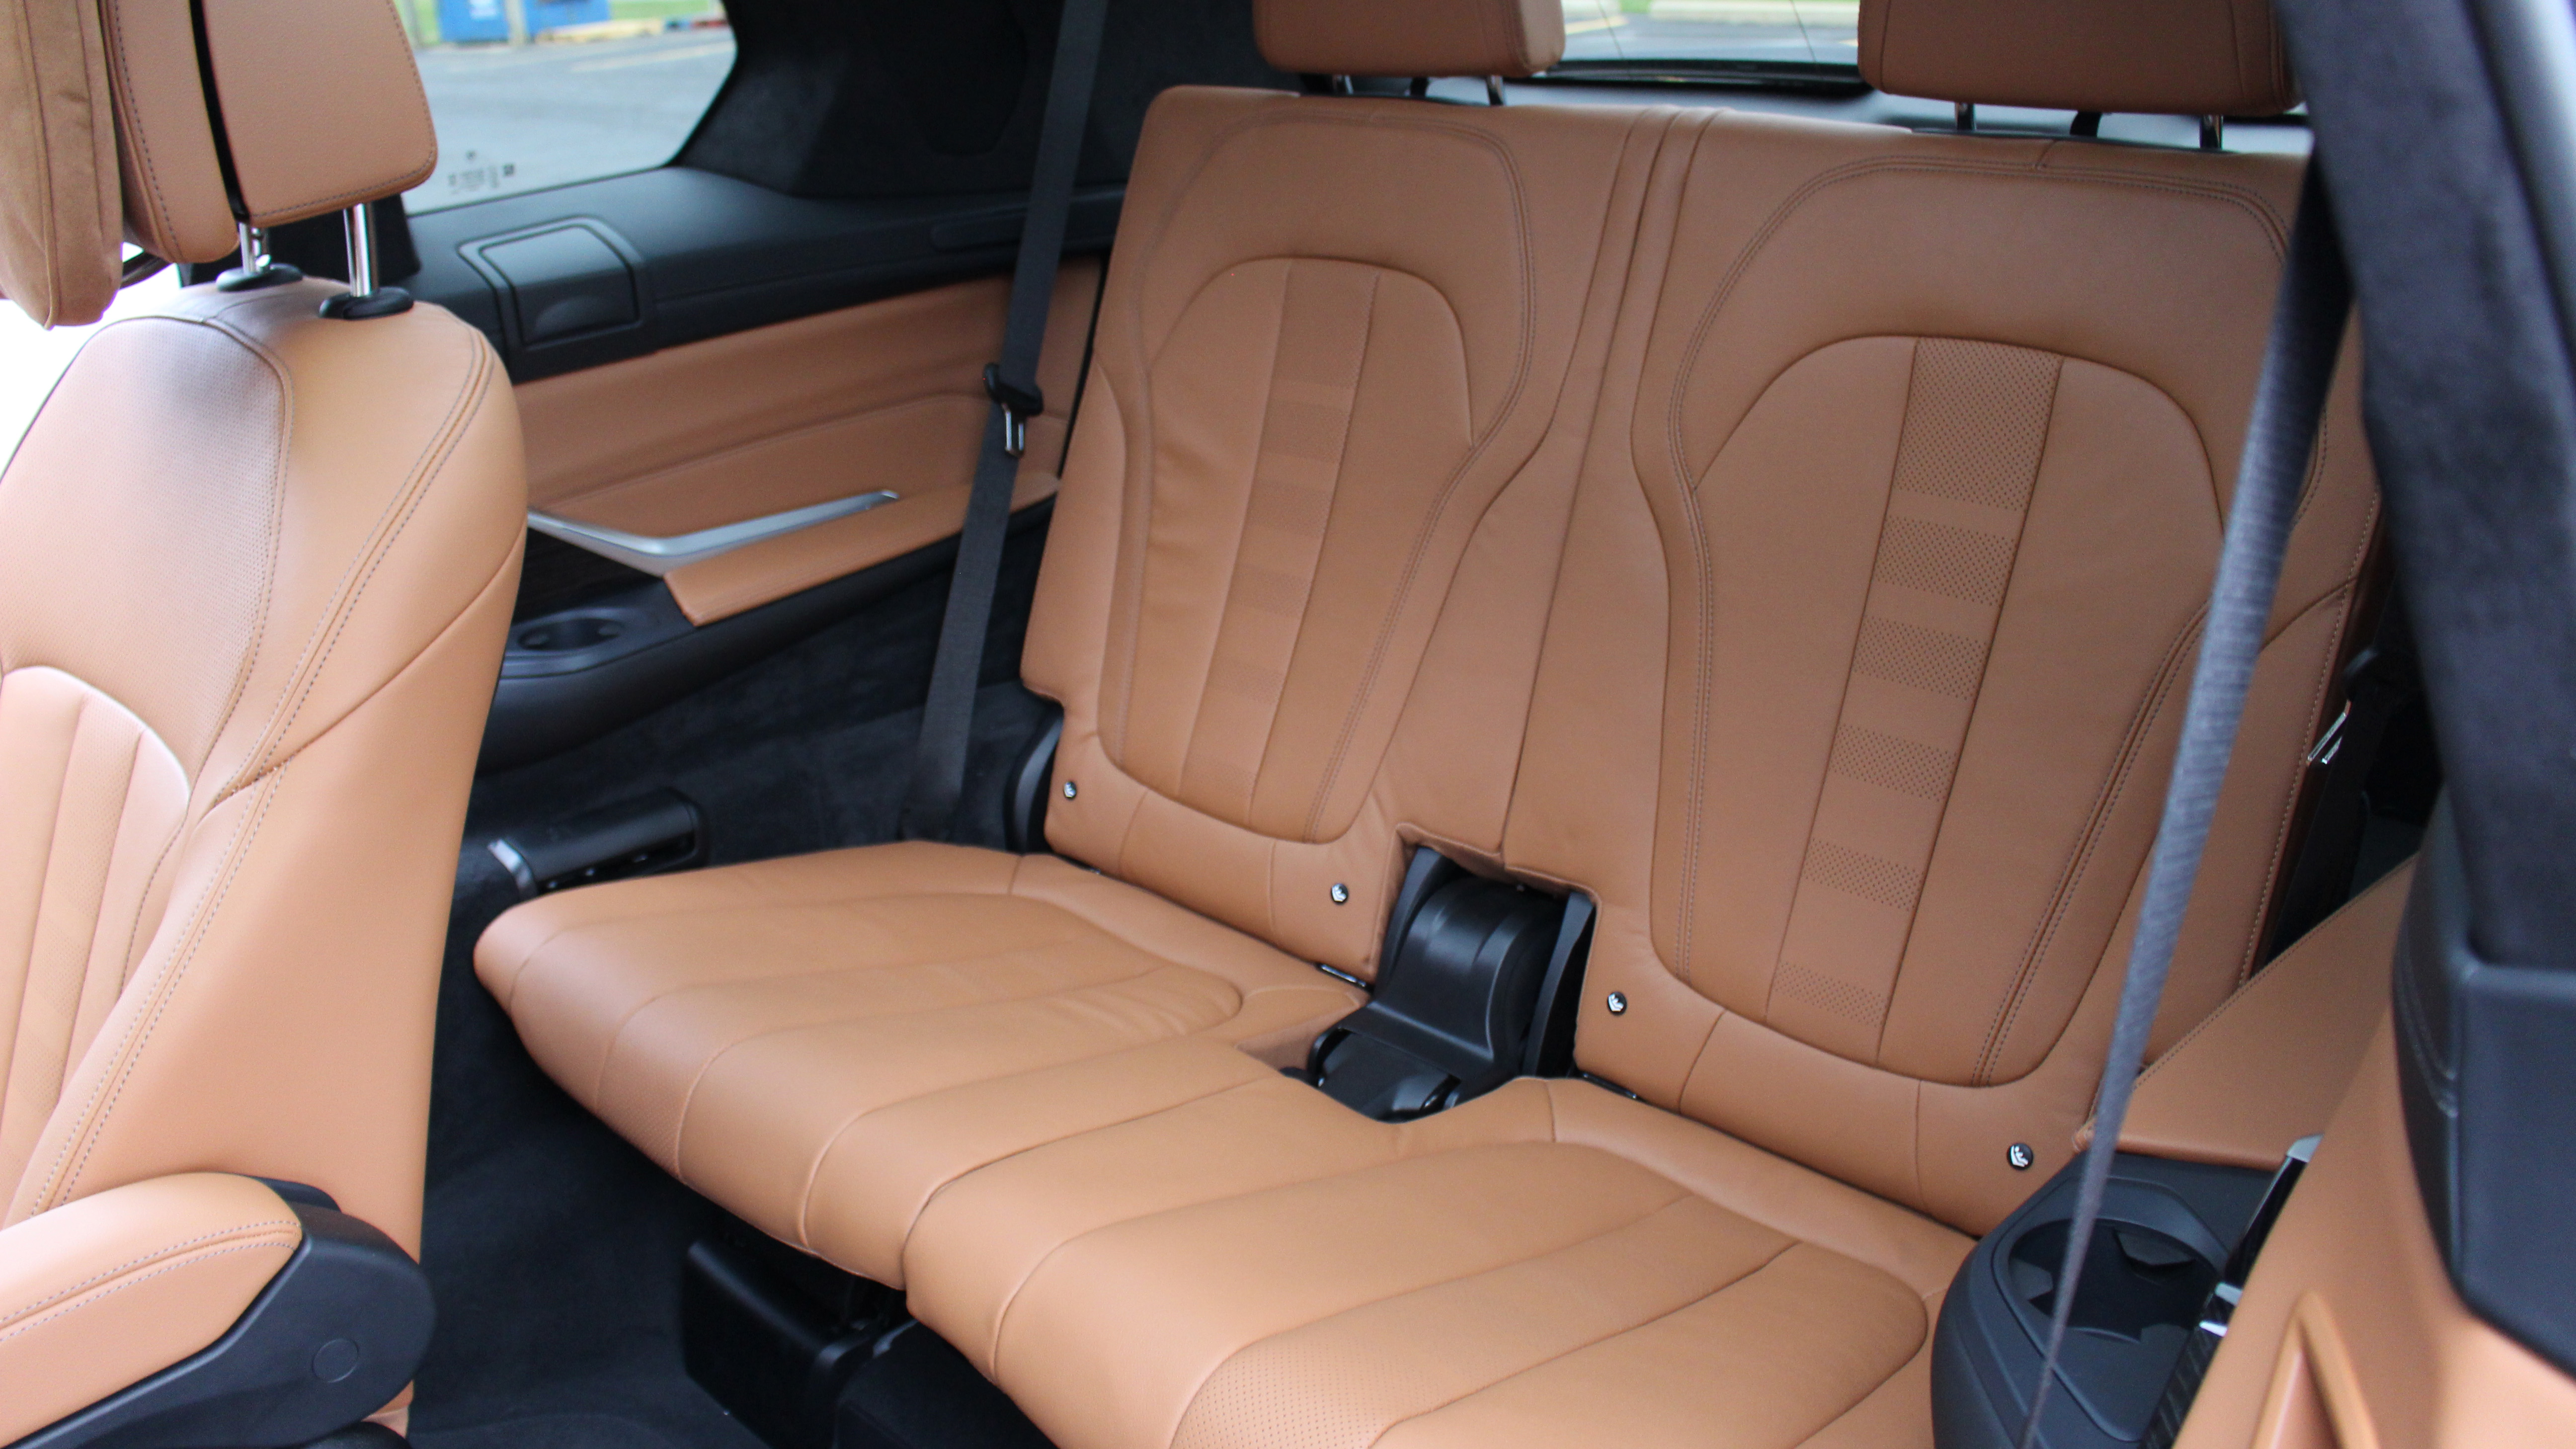 Luxury Bmw X7 Interior 3rd Row